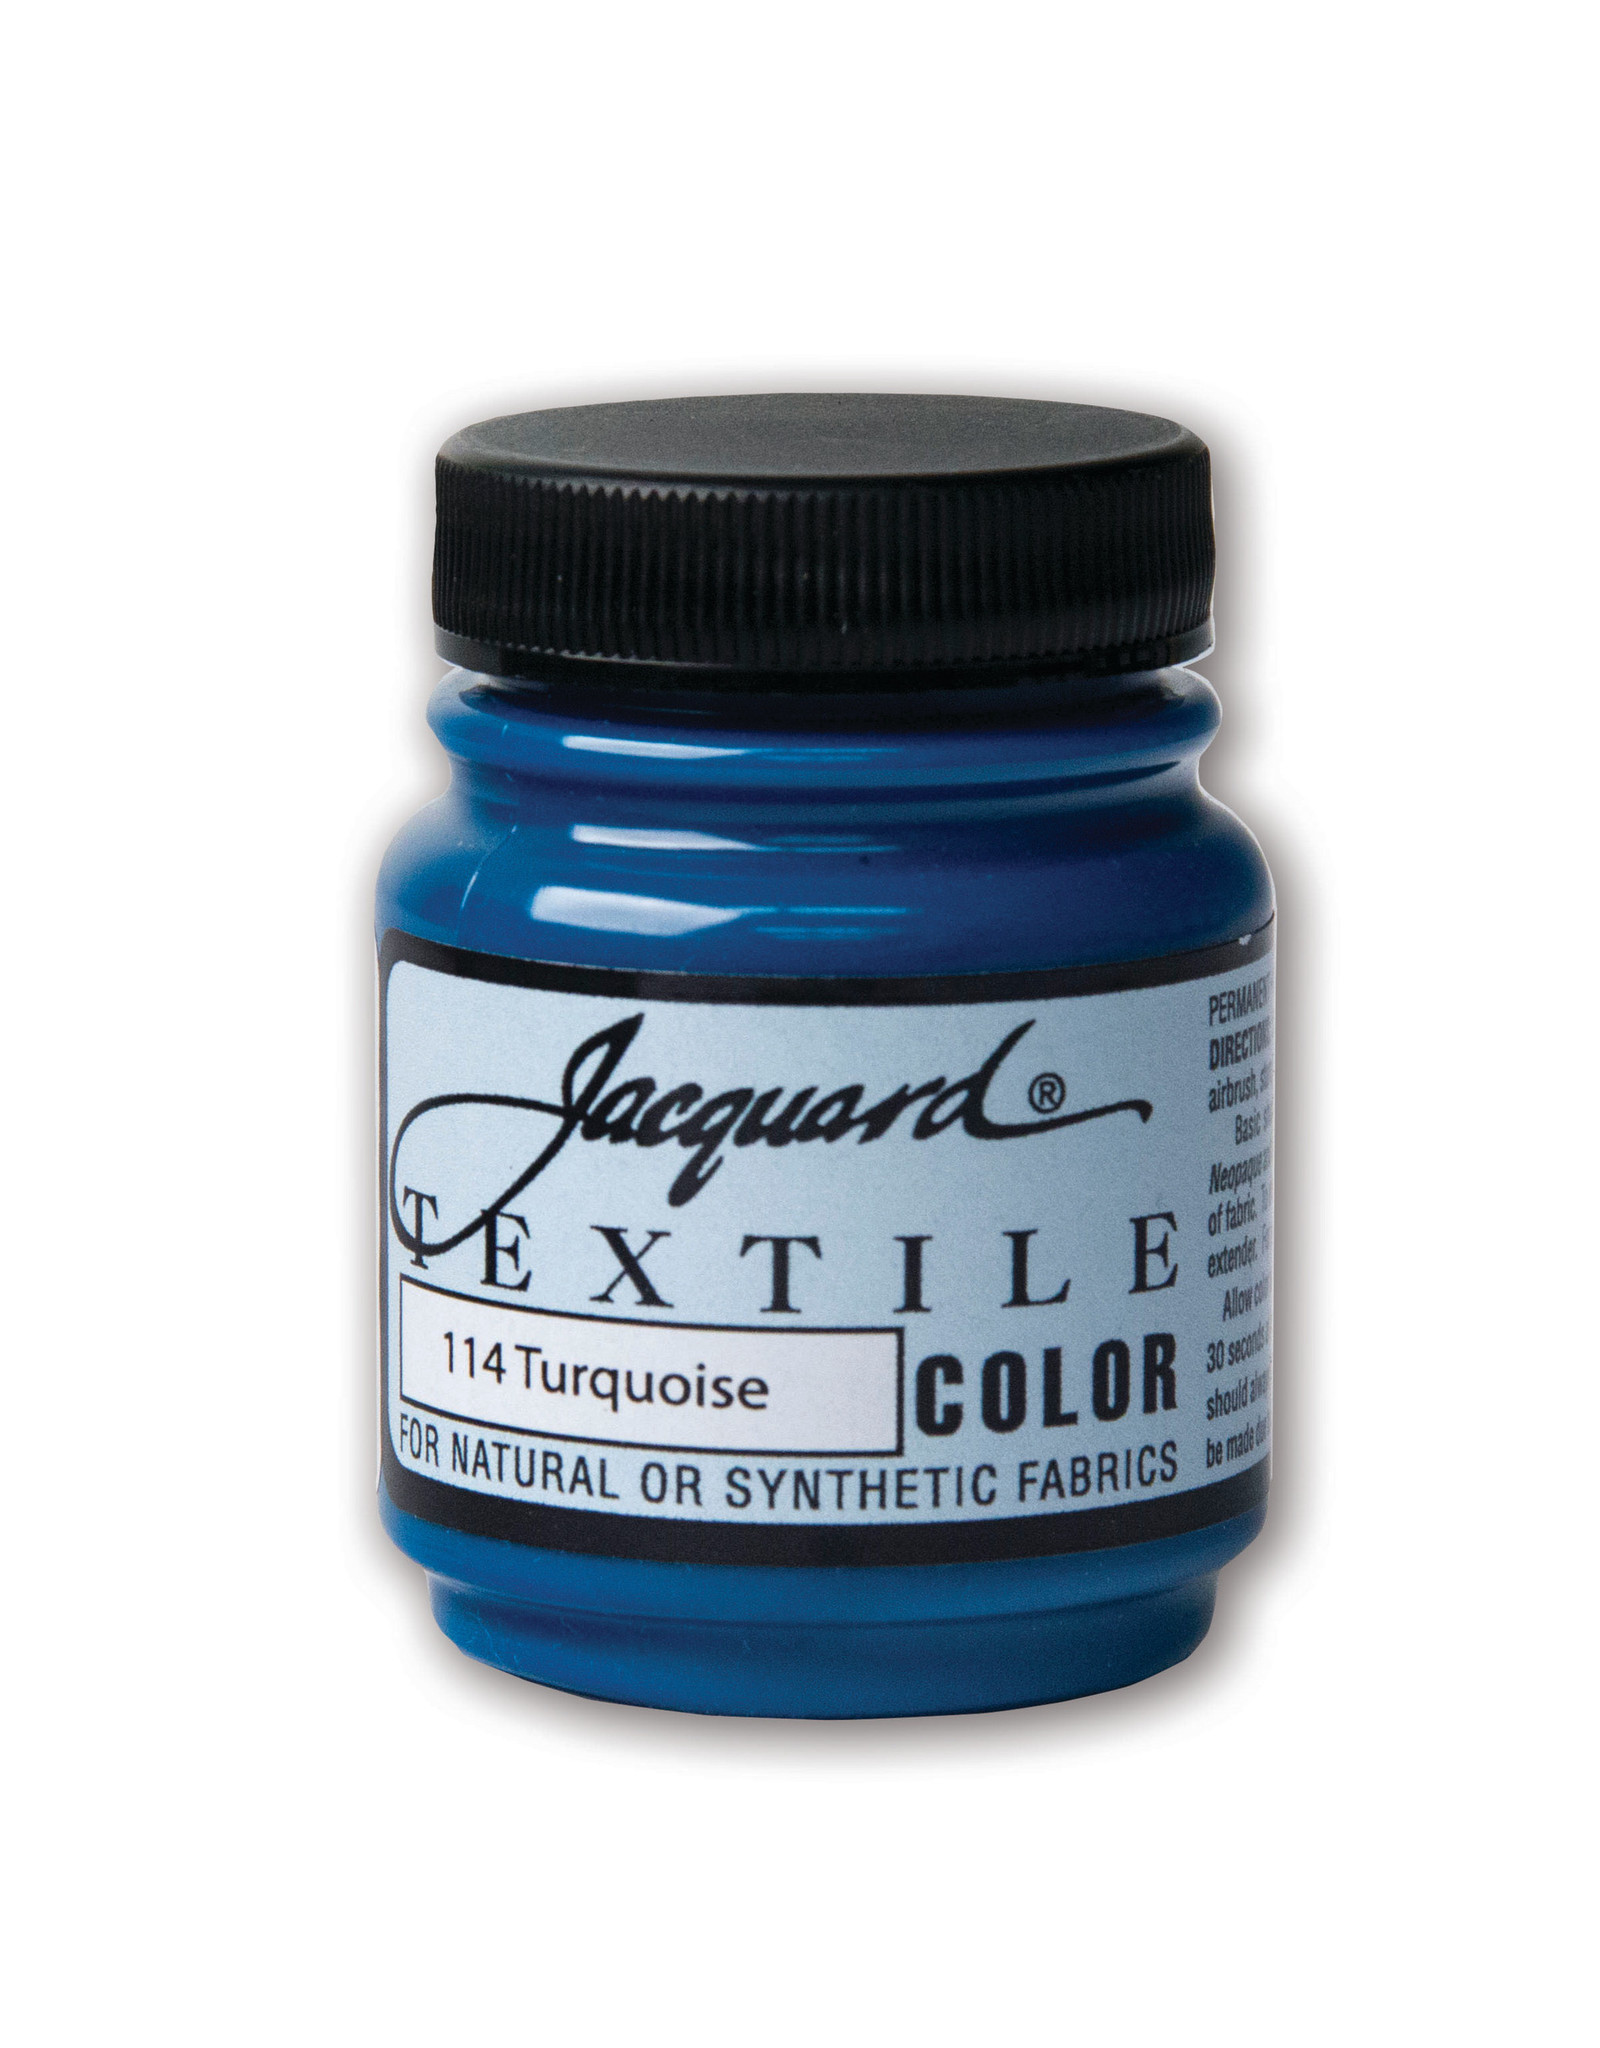 Jacquard Jacquard Textile Color, #114 Turquoise